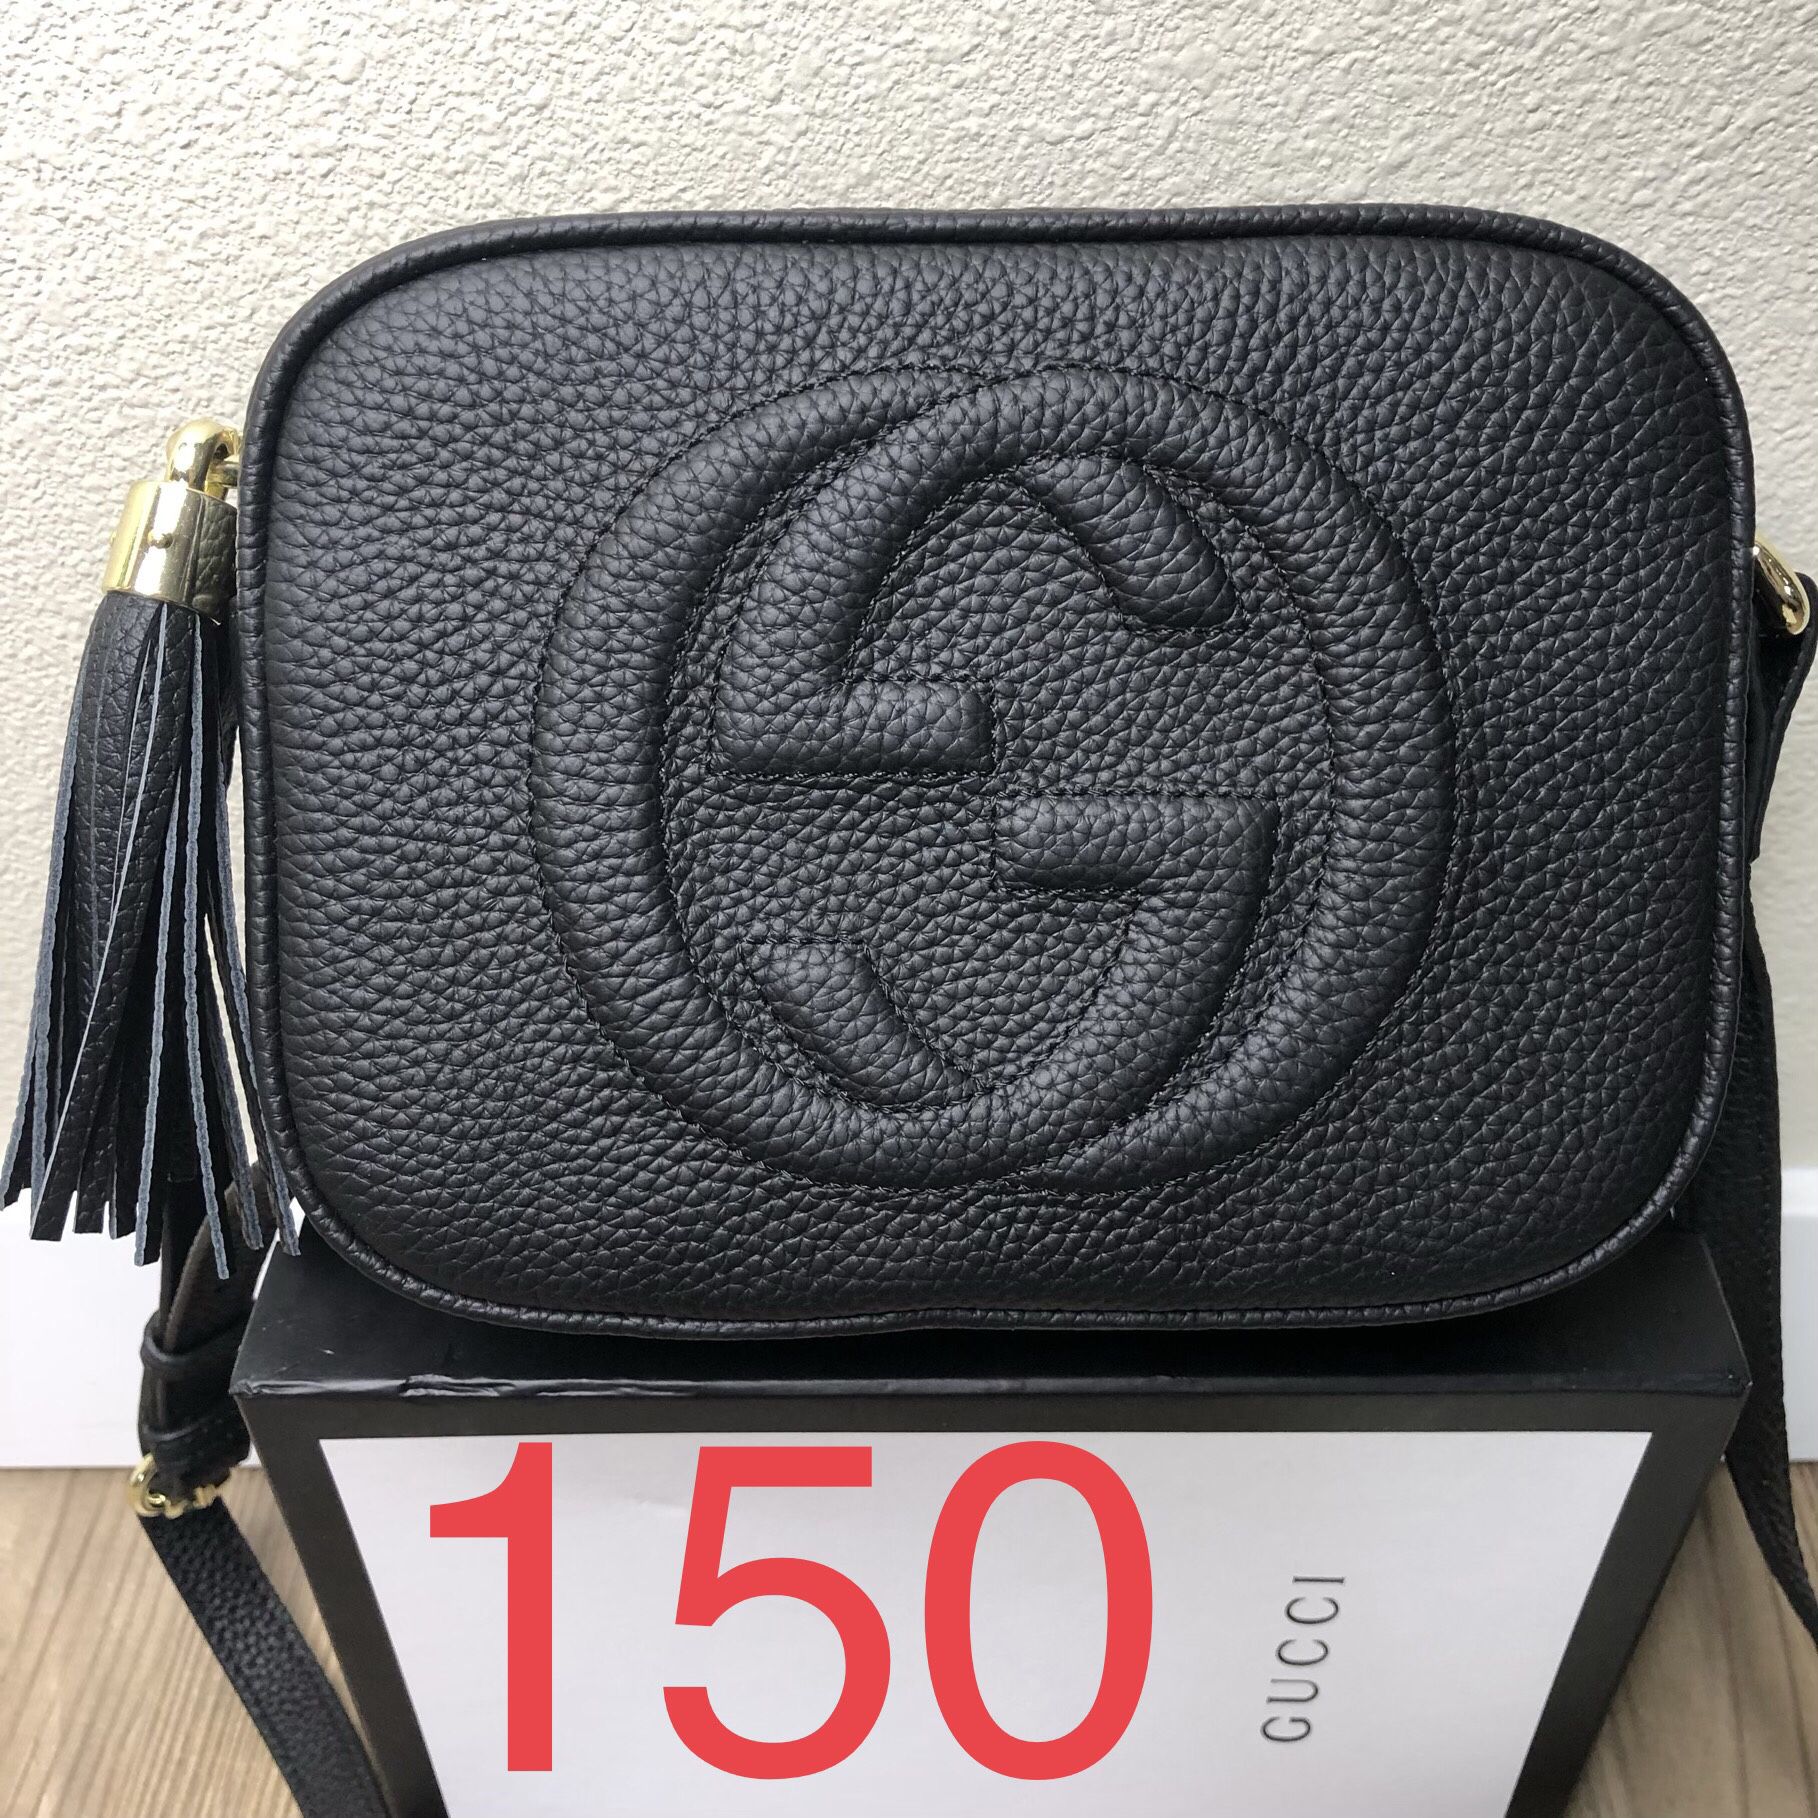 Gucci Soho handbag purse bag